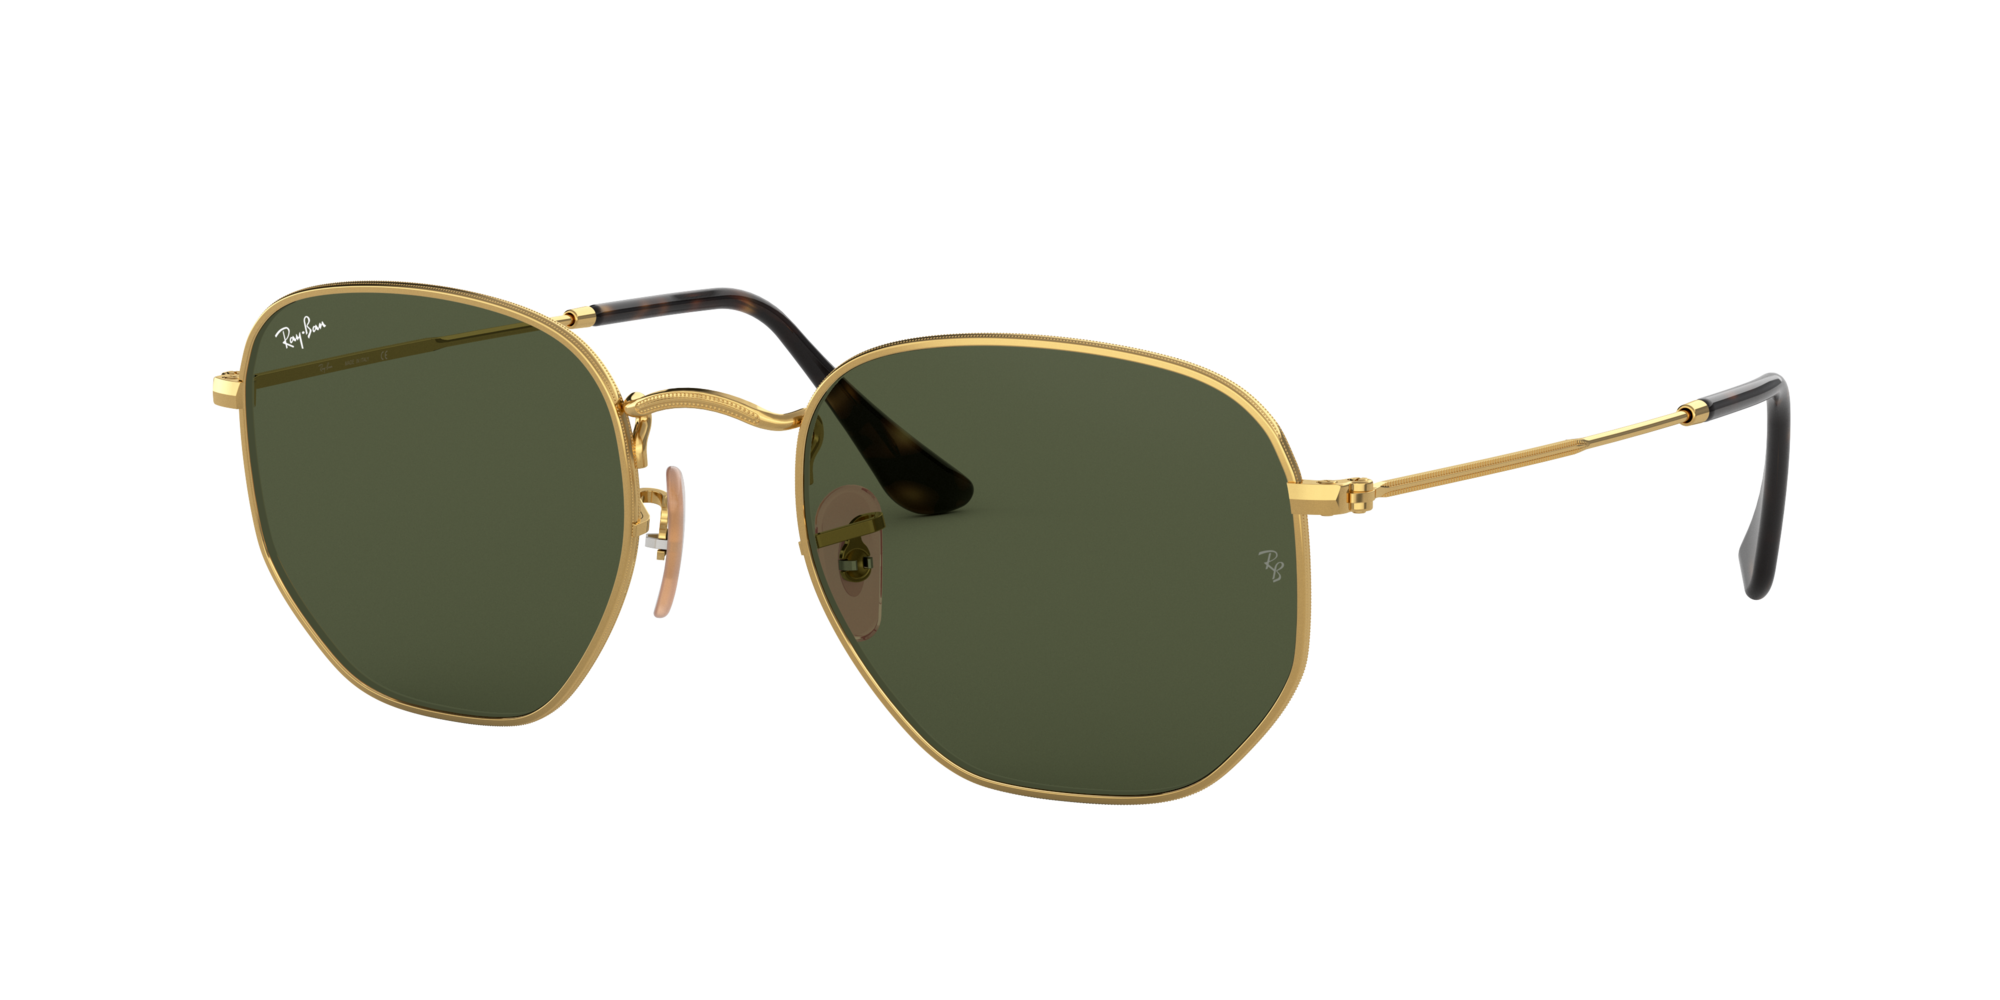 sunglasses raybans